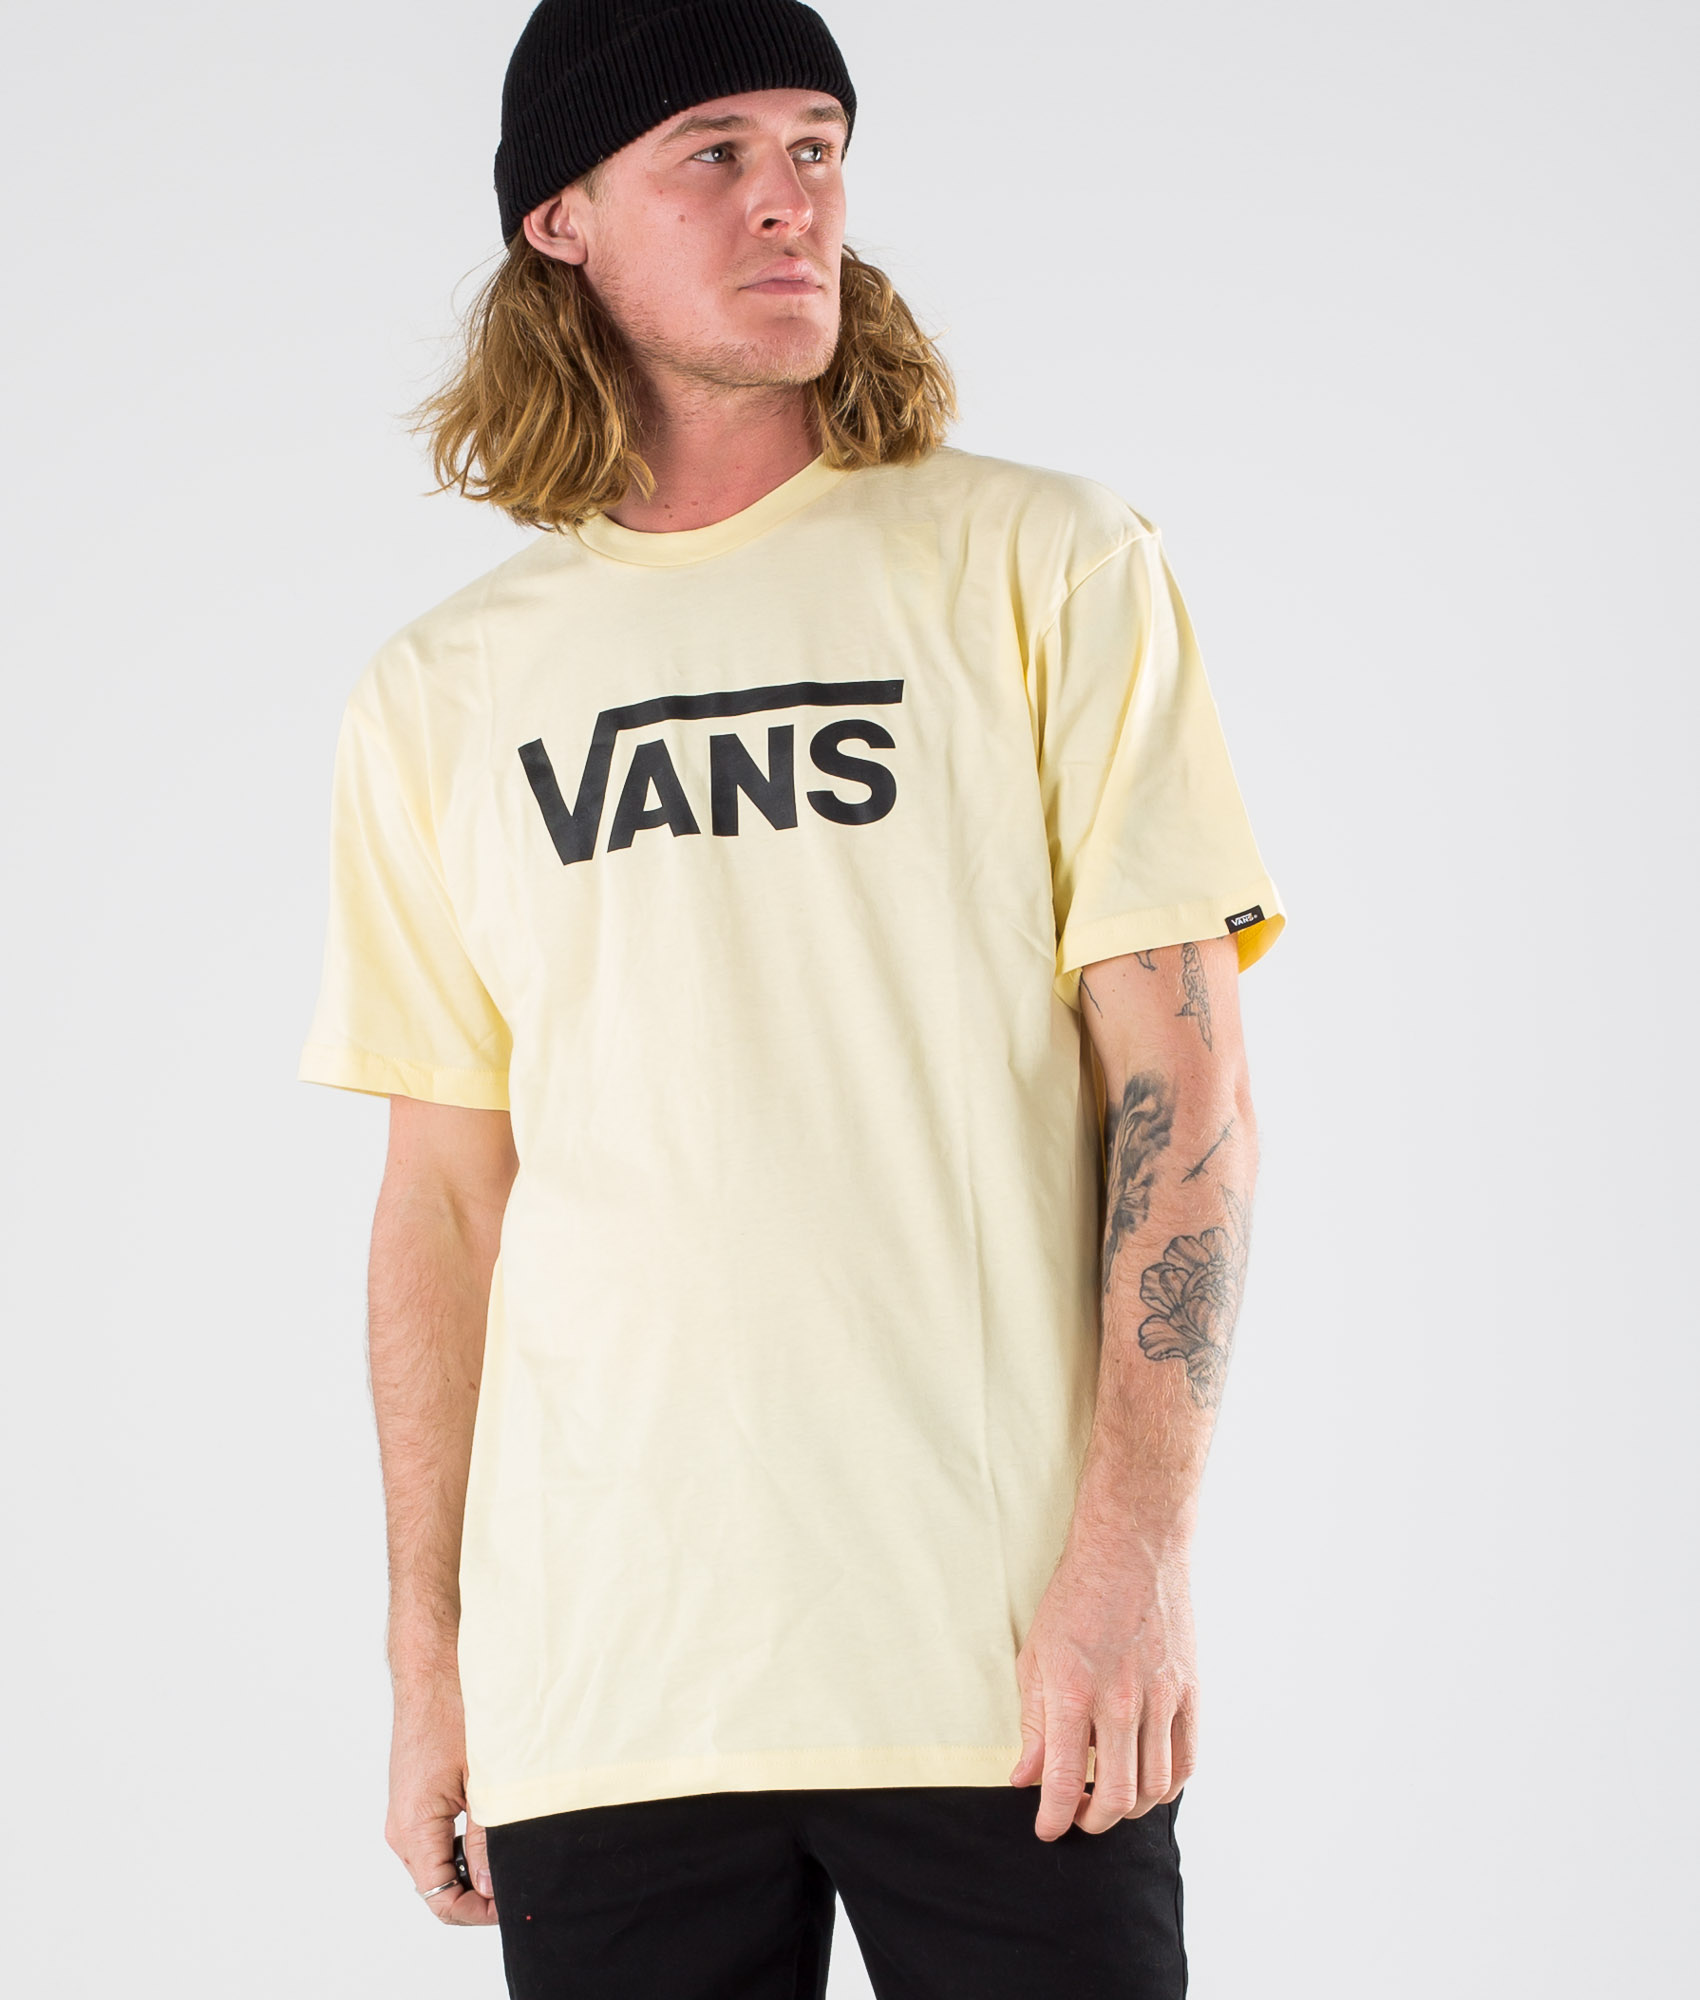 vans black and yellow shirt